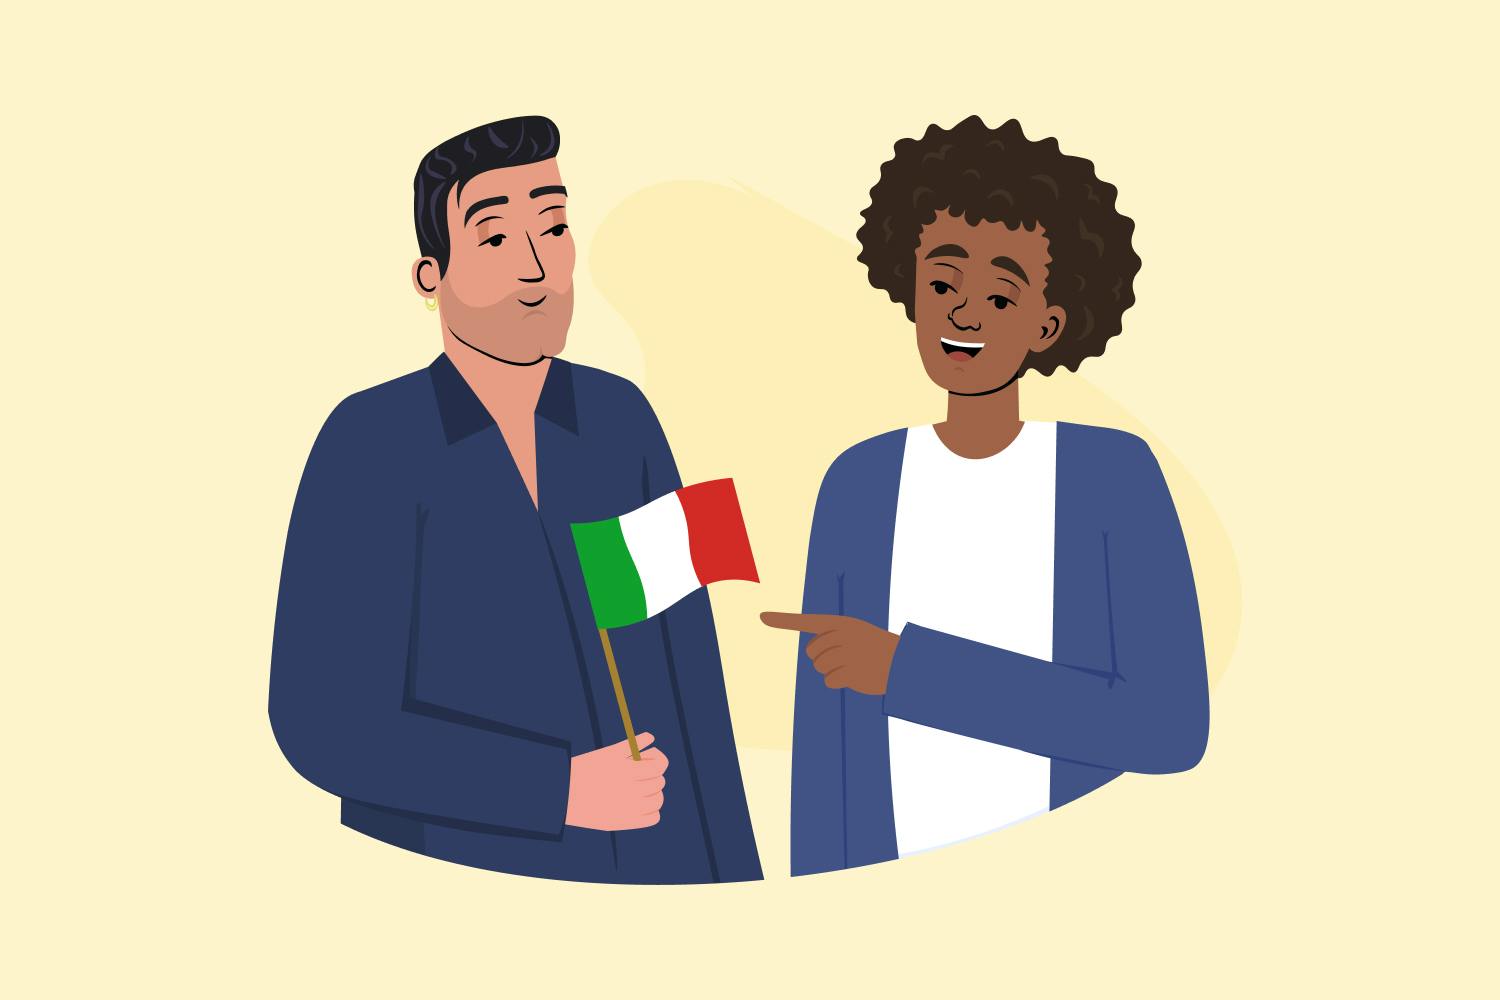 Italian Pronunciation